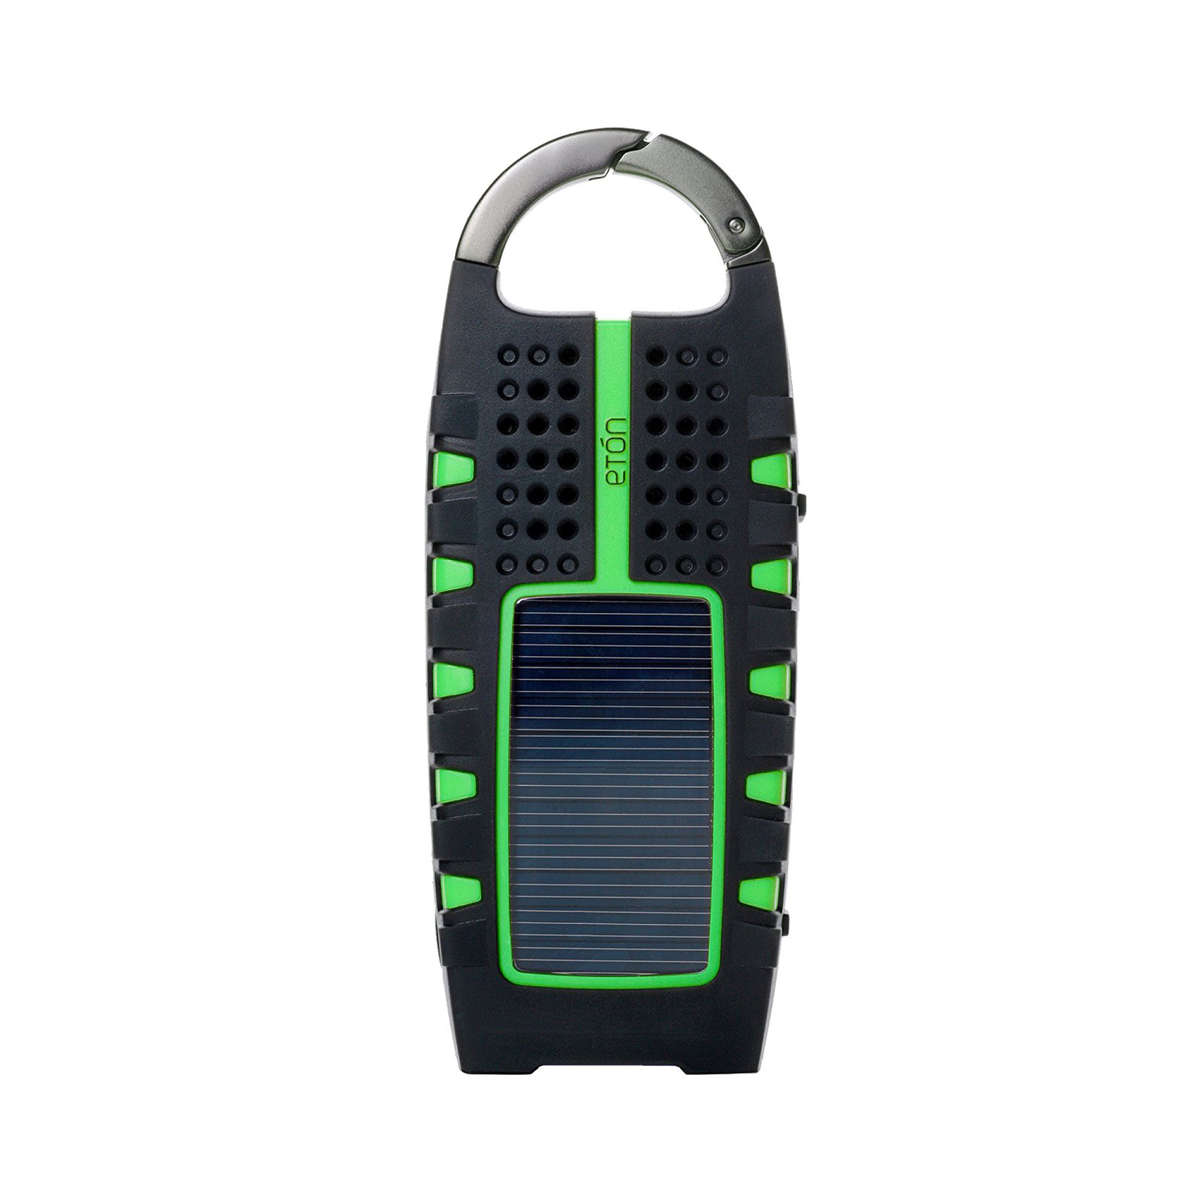 Eton- Rugged, Portable Multi-Purpose Weather Alert, Digital Radio, with Phone Charger and Flashlight